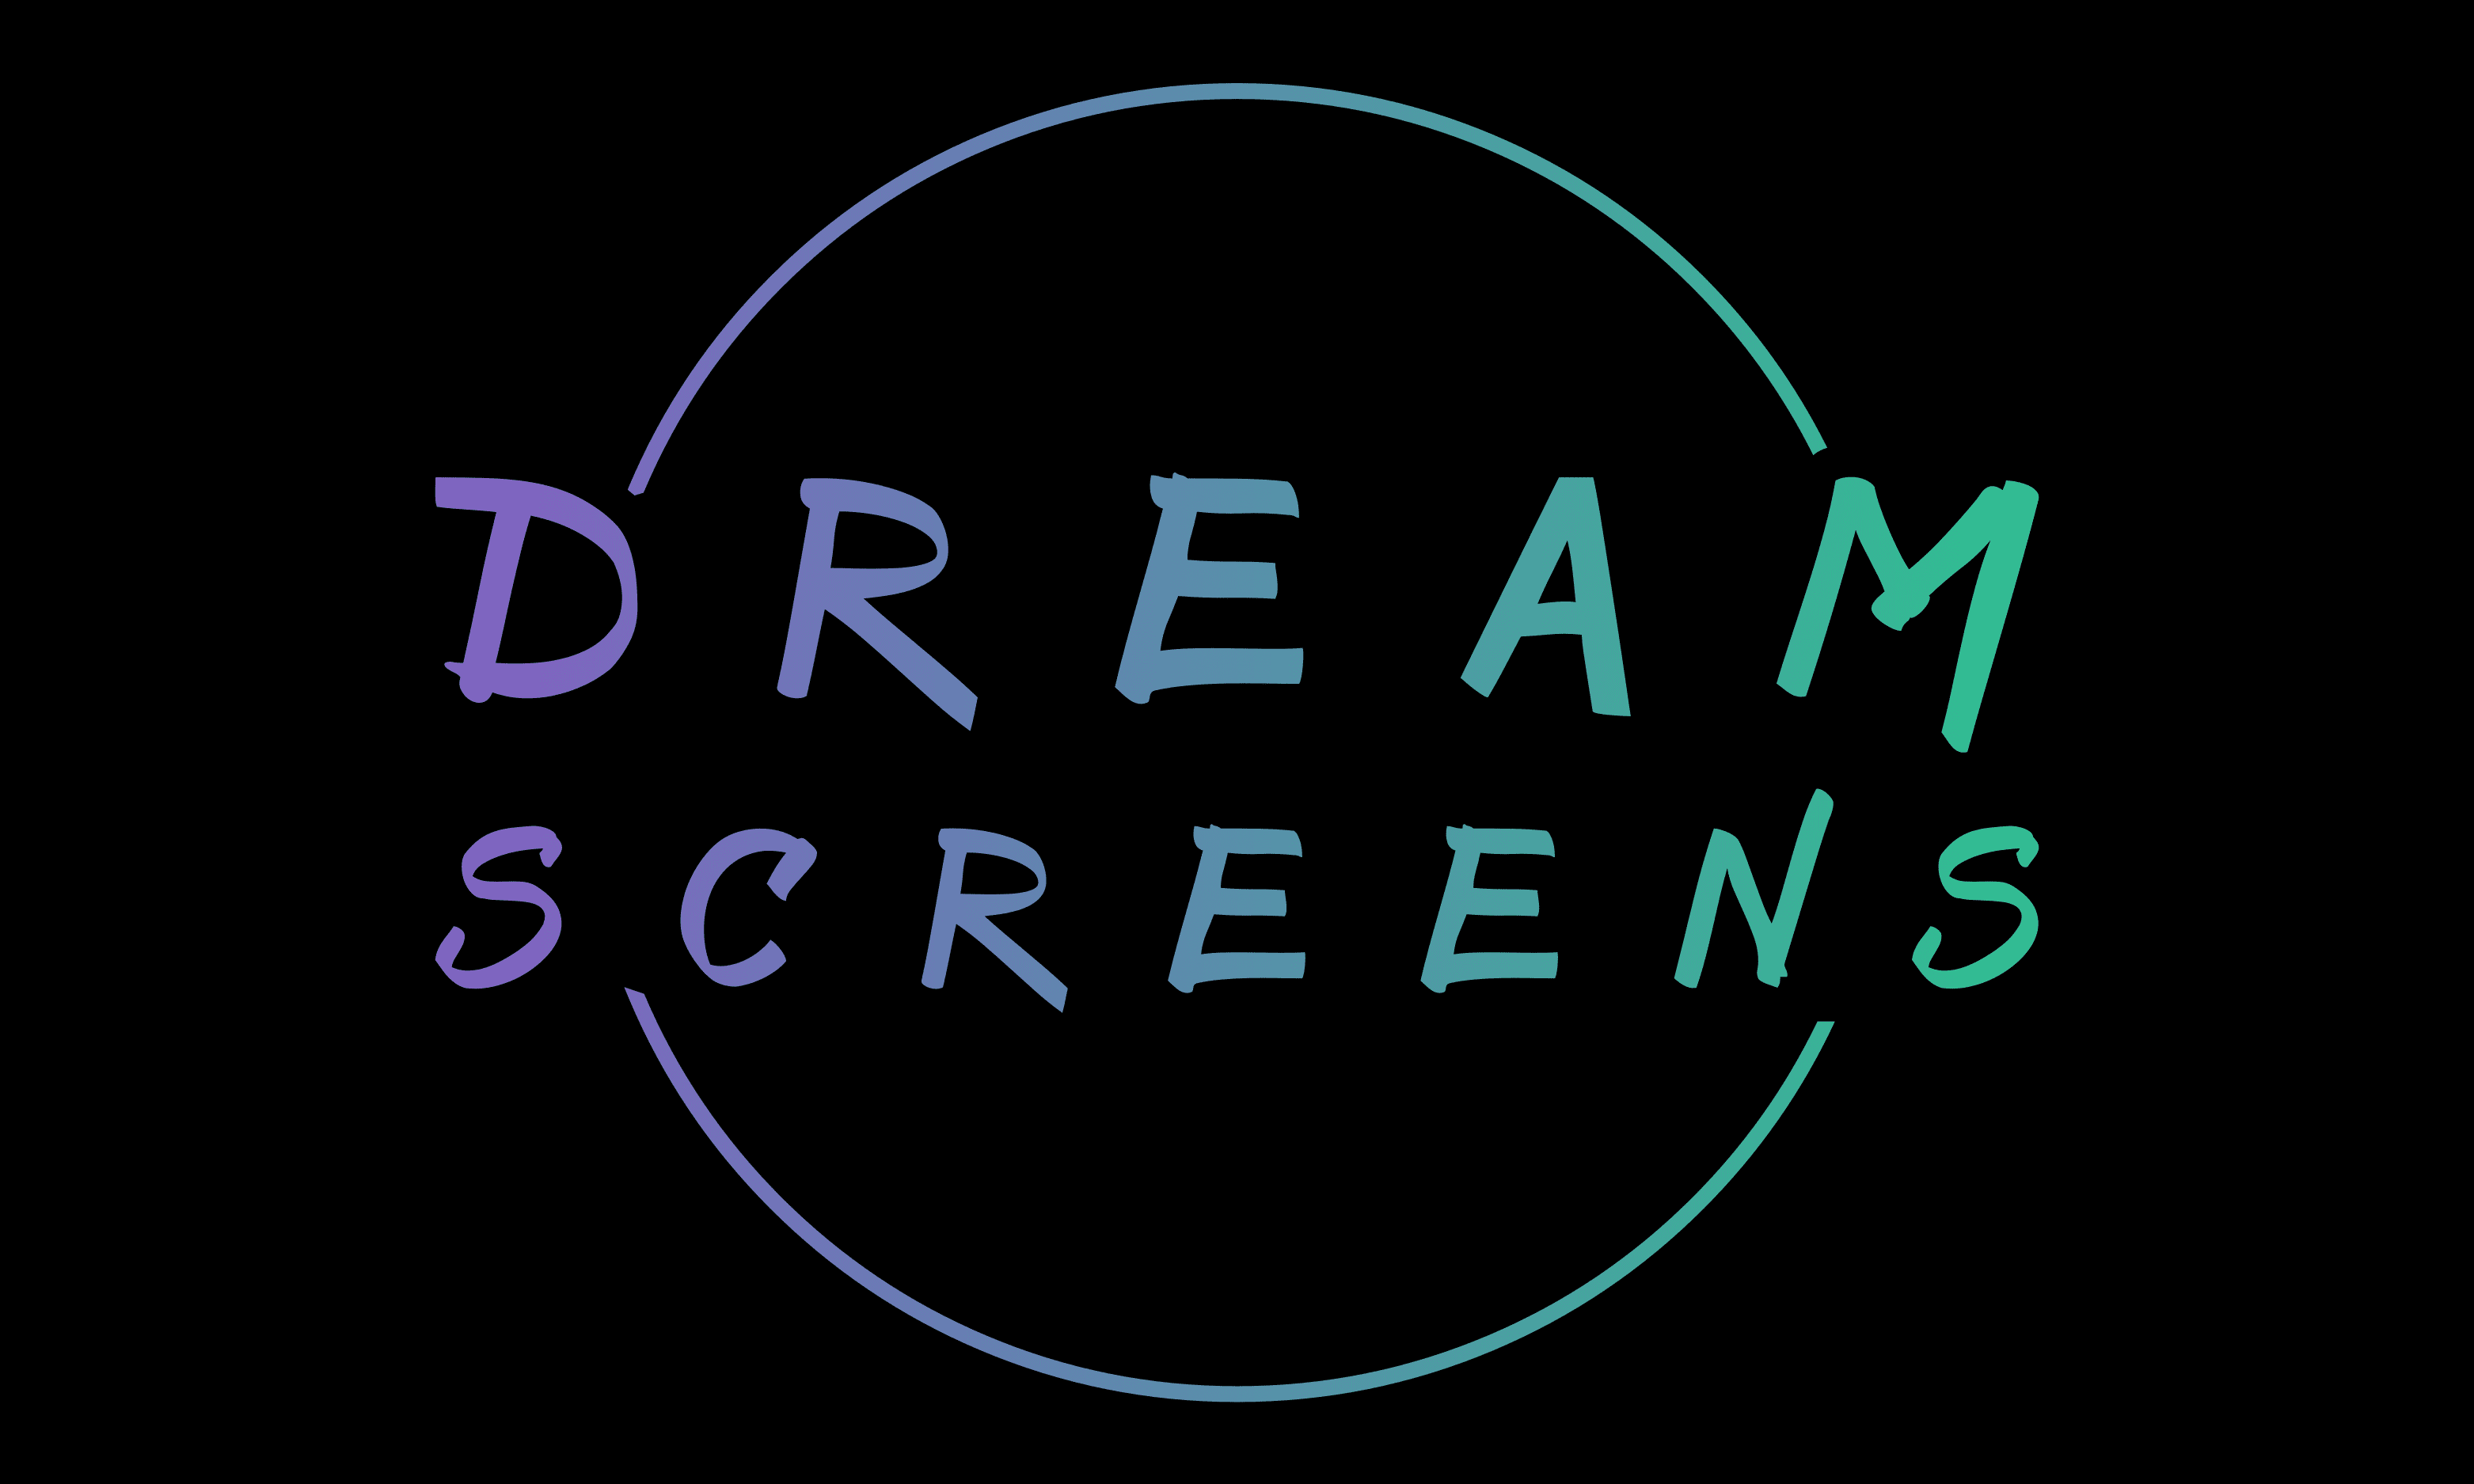 Your Dream Screens